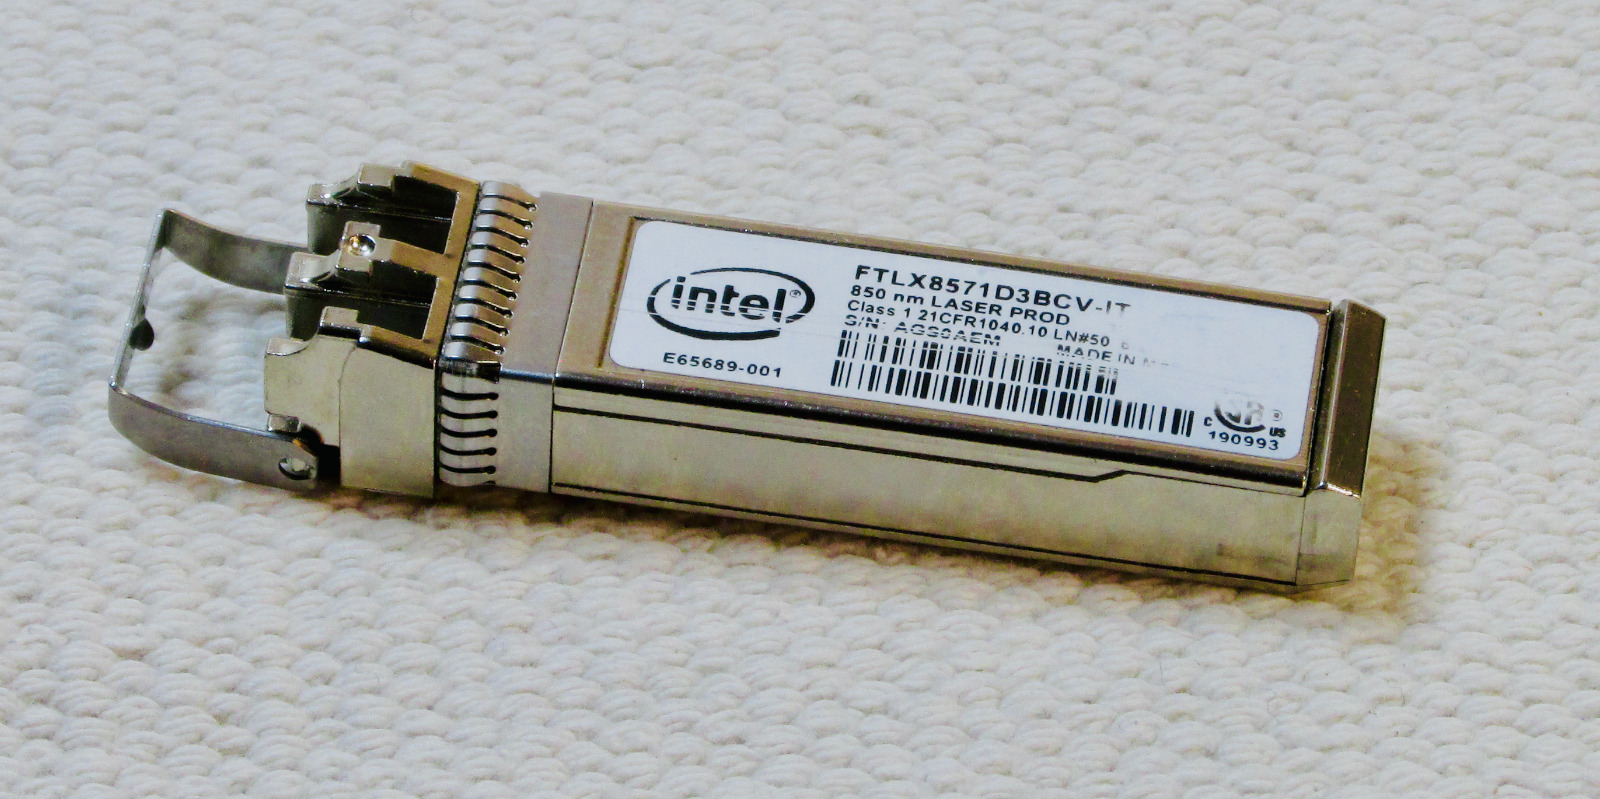 Genuine Intel 10Gbe FTLX8571D3BCV-IT SFP+ Optical Transceiver Module E65689-001